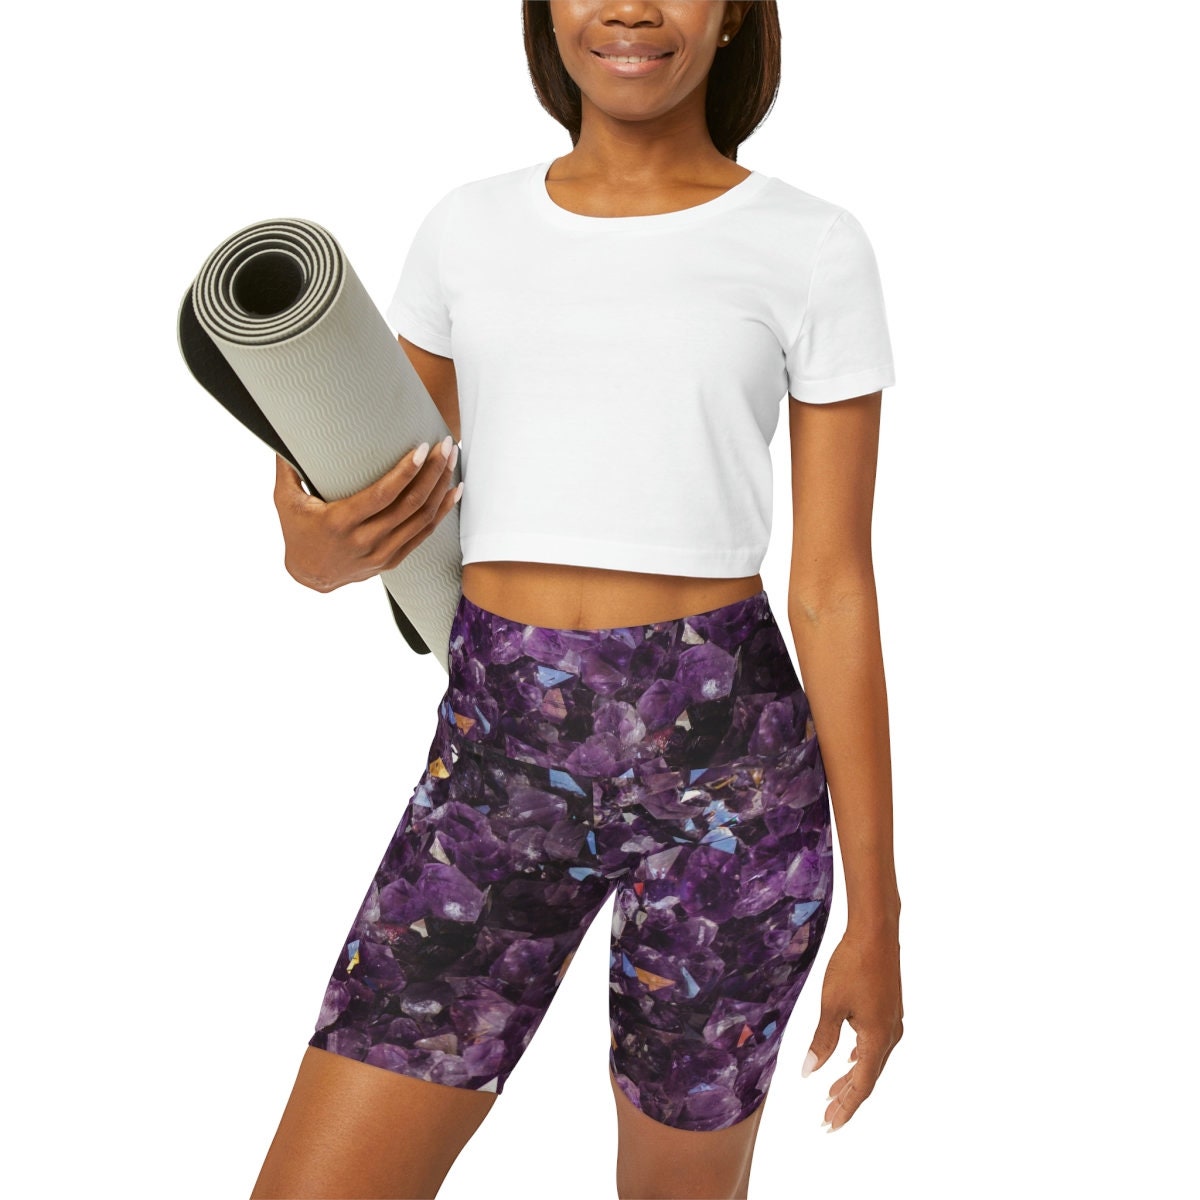 Amethyst Yoga Pants purple leggings crystal yoga pants amethyst capri leggings amethyst spandex spiritual yoga pants